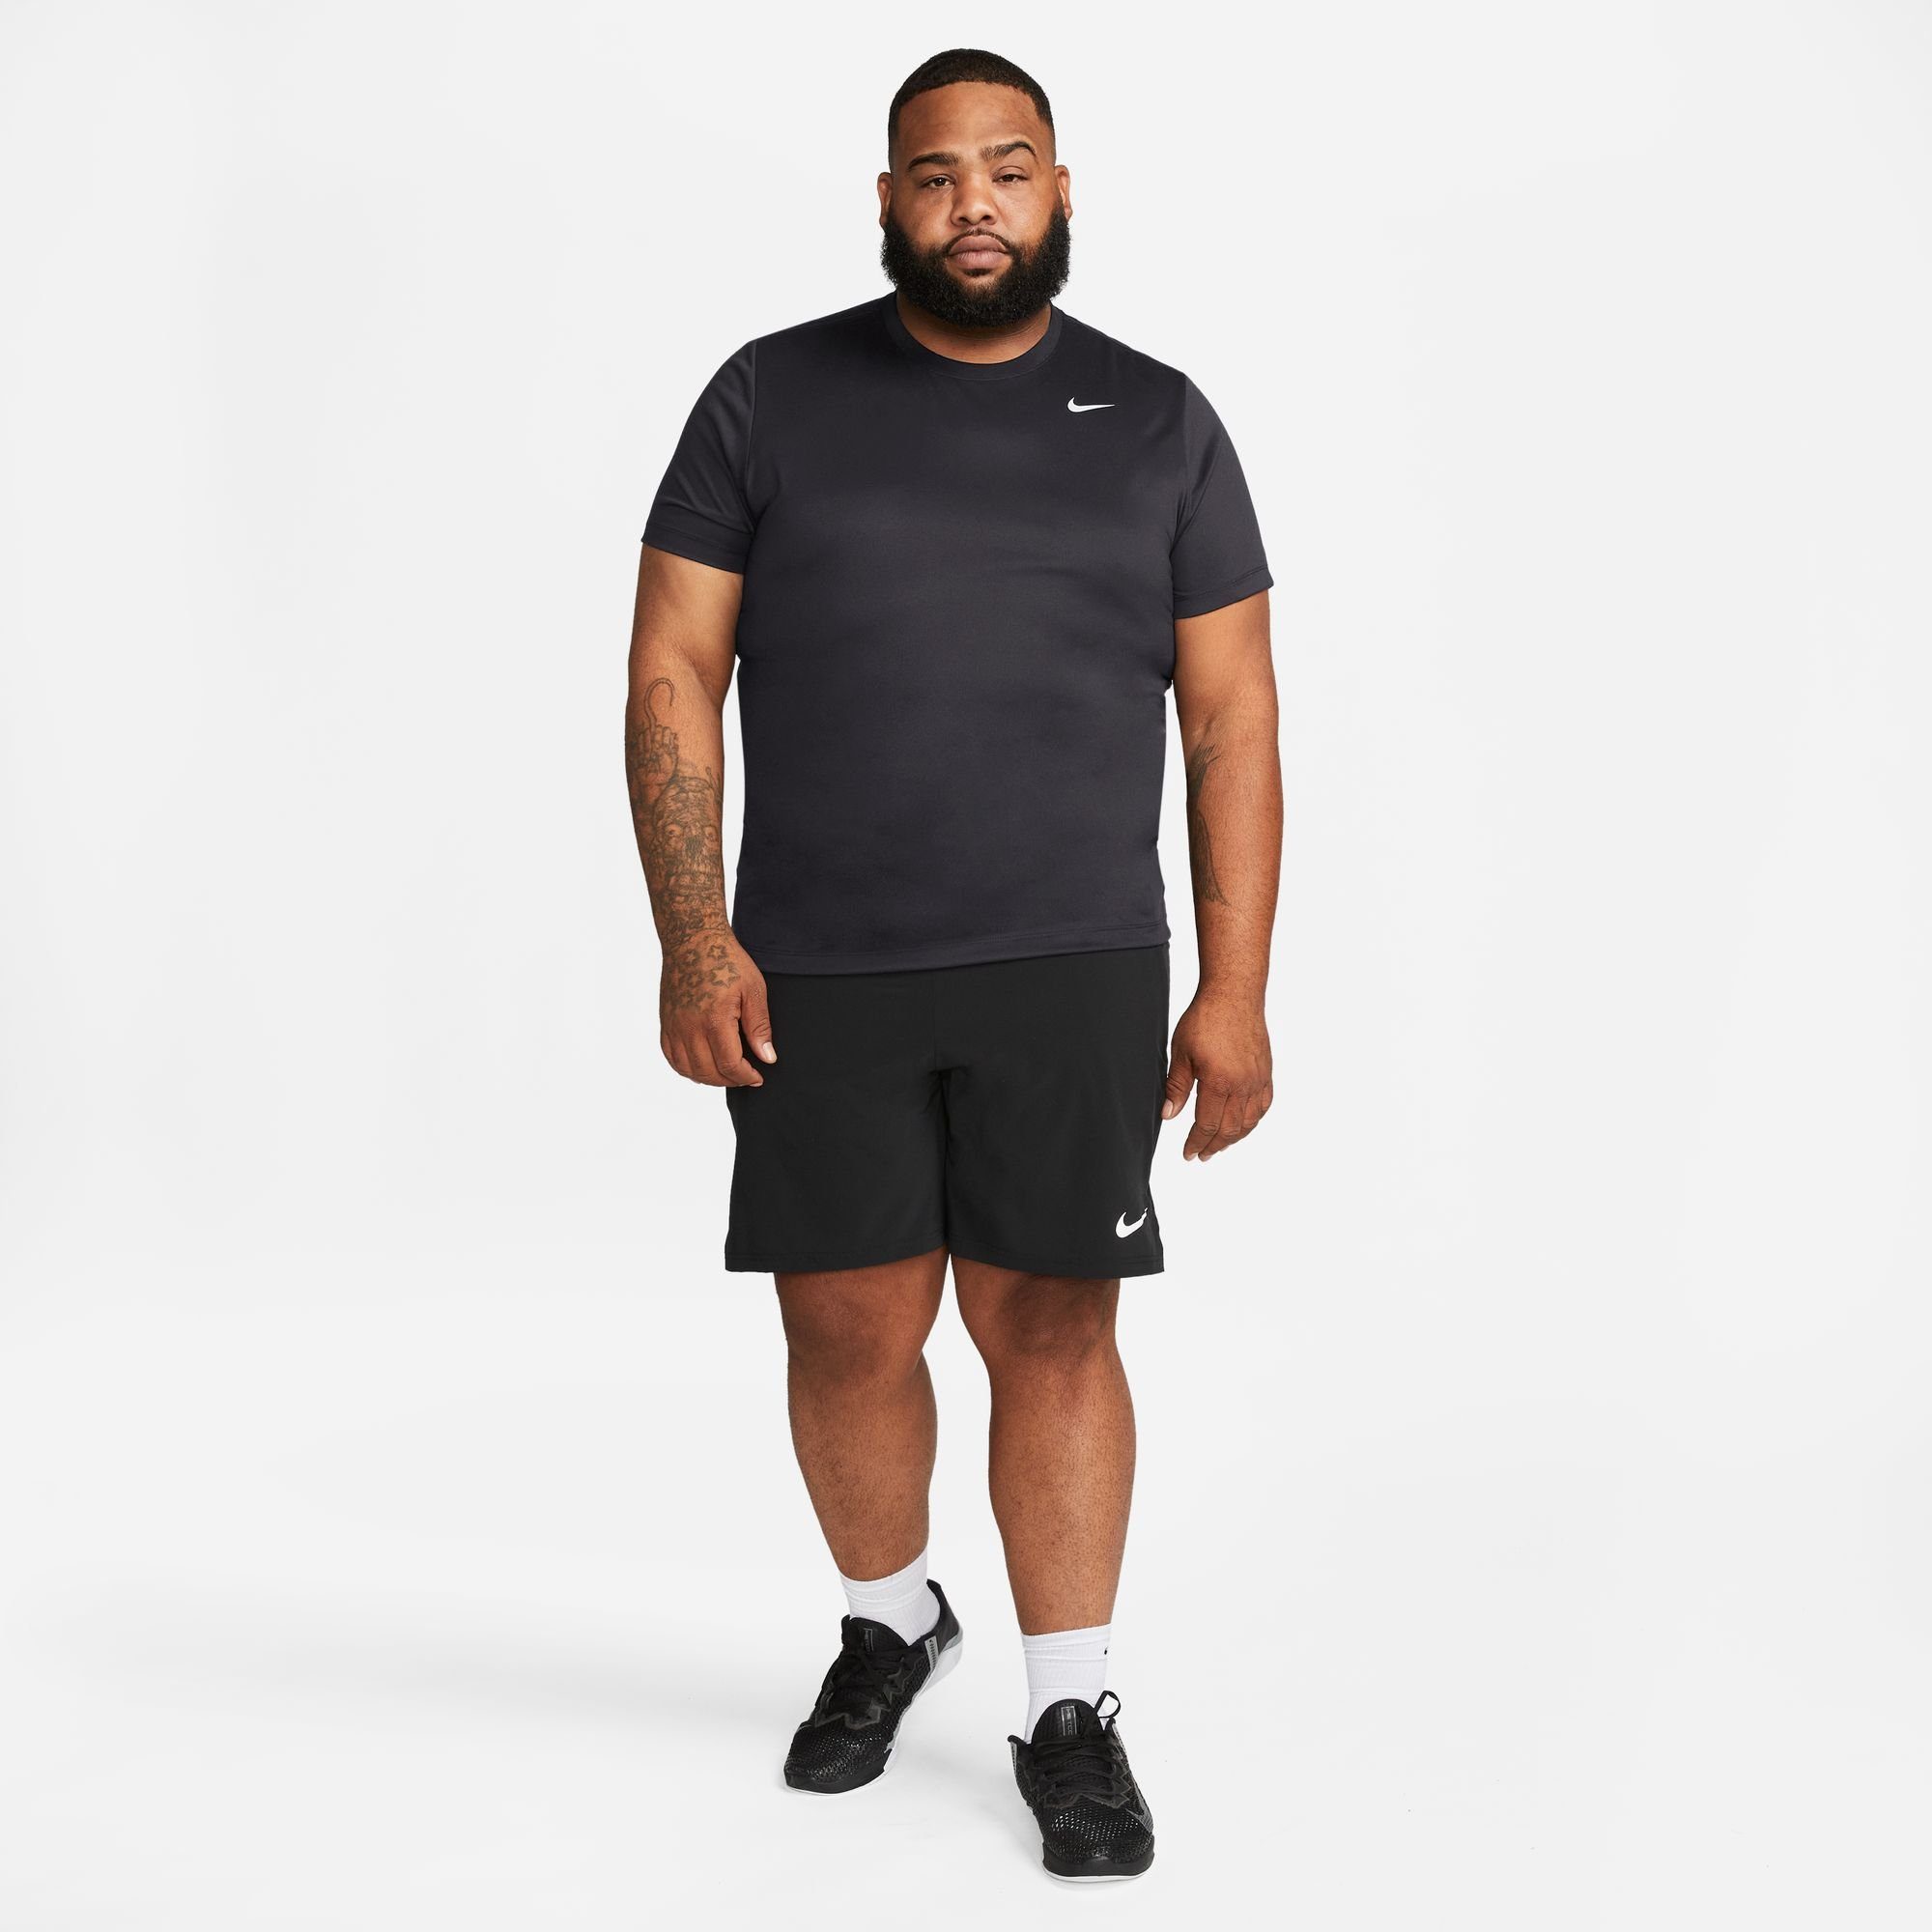 BLACK/MATTE FITNESS DRI-FIT SILVER LEGEND MEN'S Nike Trainingsshirt T-SHIRT